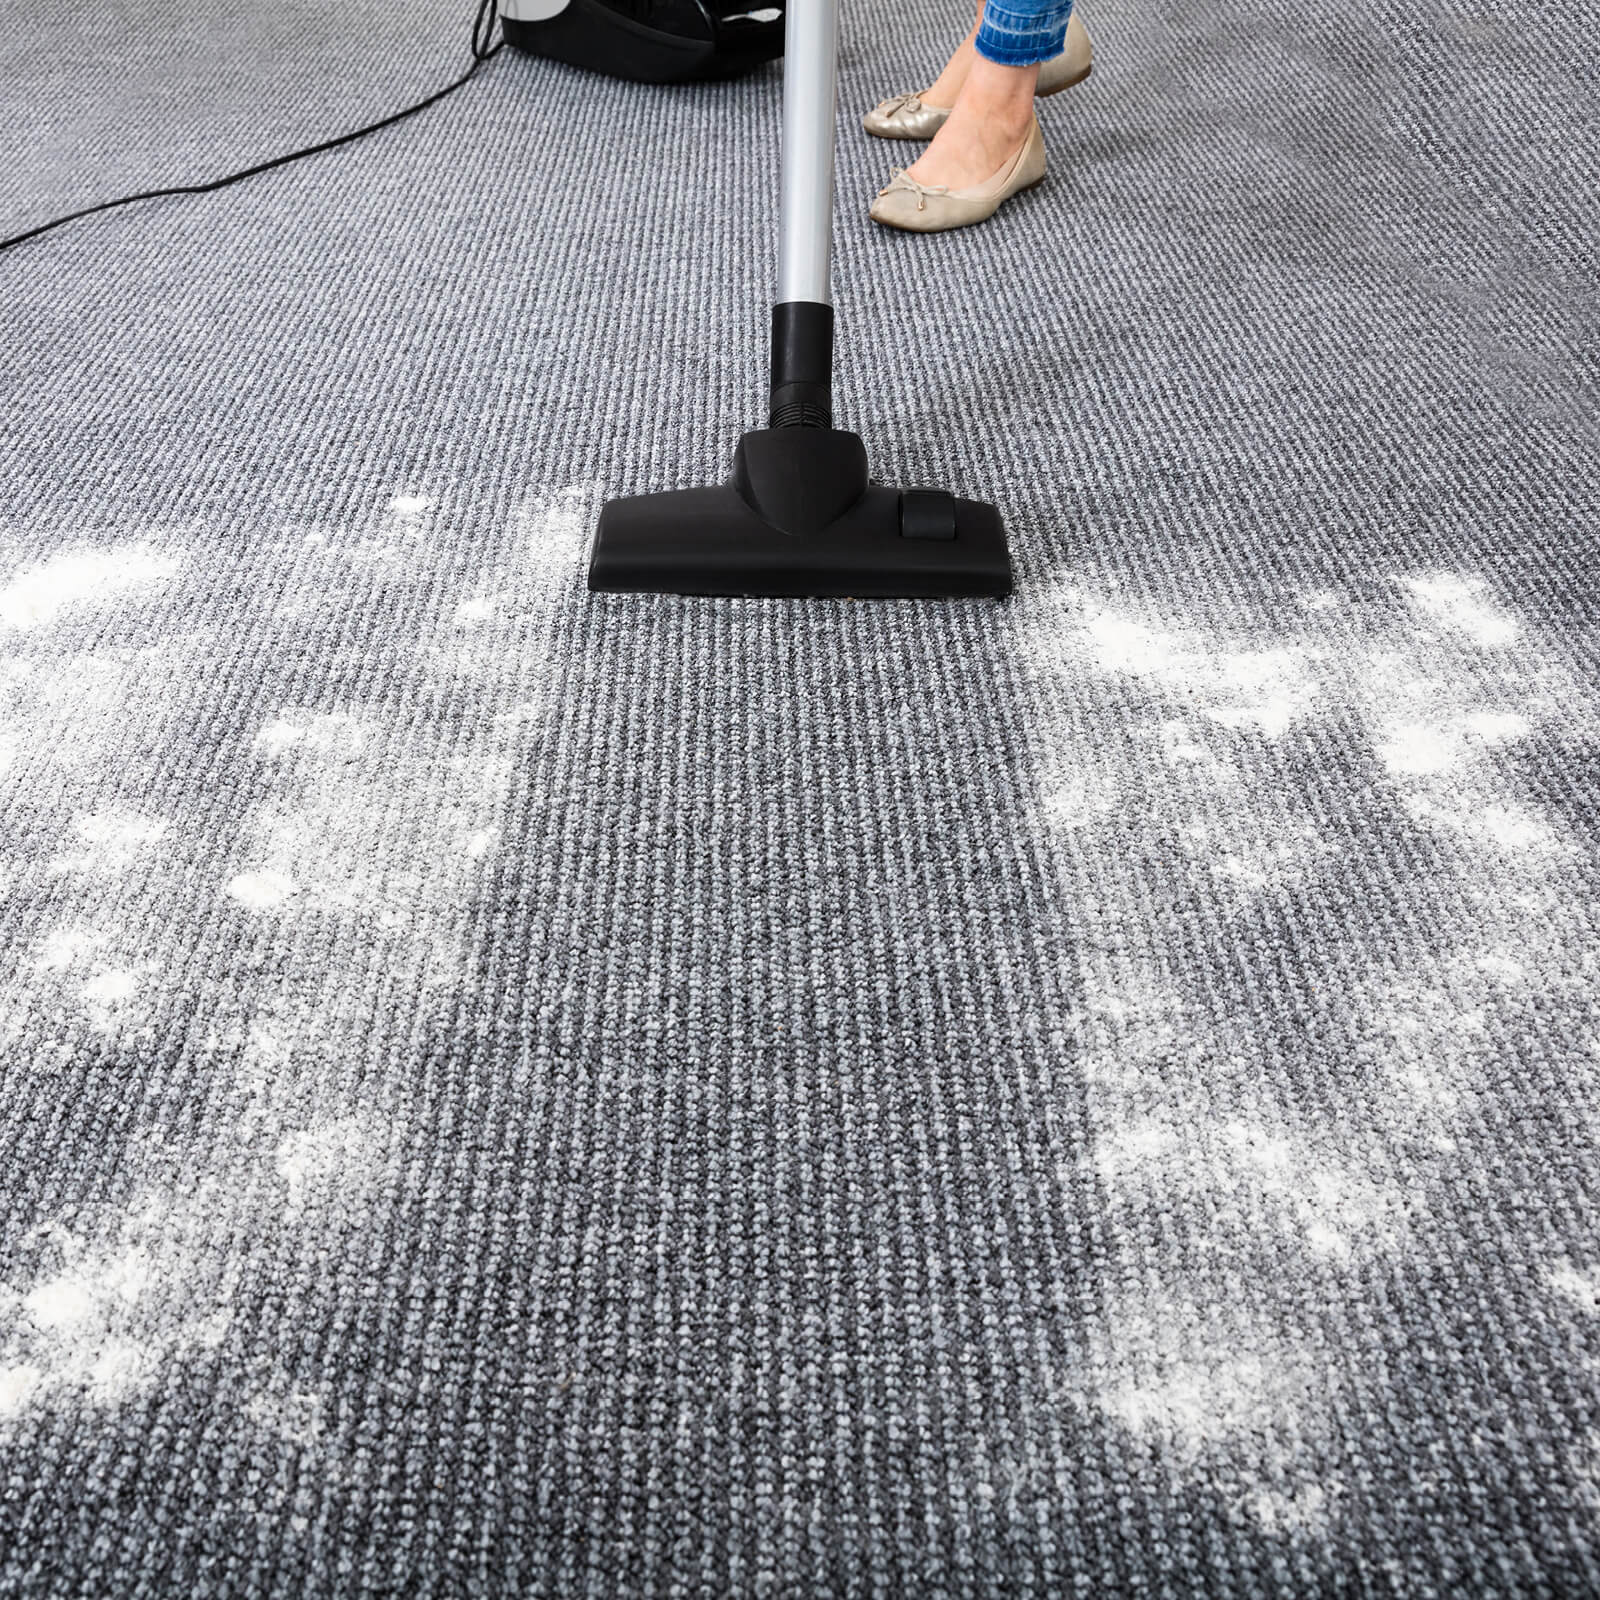 Carpet cleaning | Carpetland USA